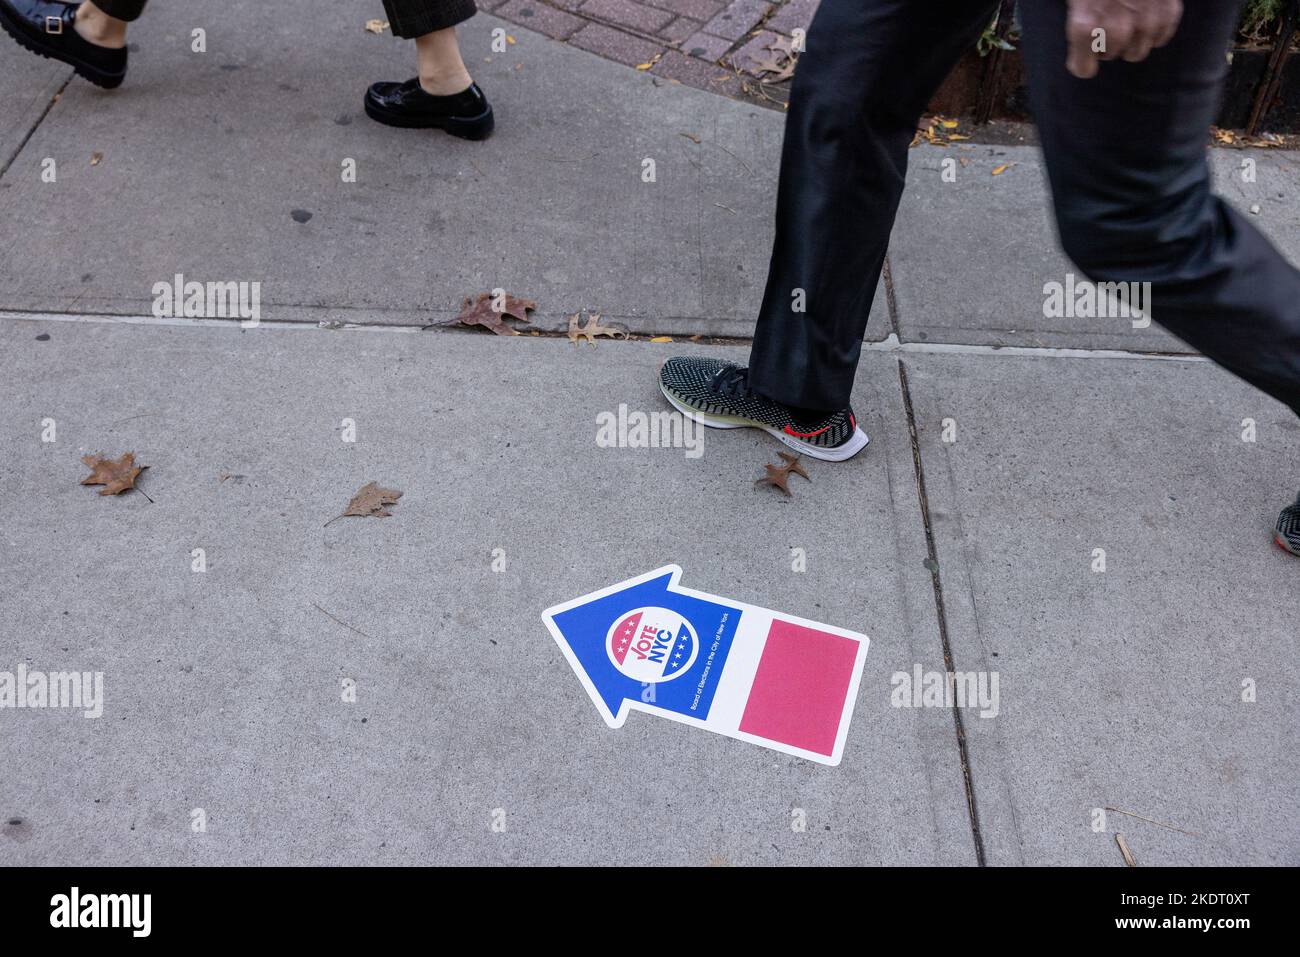 NEW YORK, N.Y. — November 8, 2022: Pedestrians walk near a polling site in Manhattan’s TriBeCa neighborhood on Election Day 2022. Stock Photo